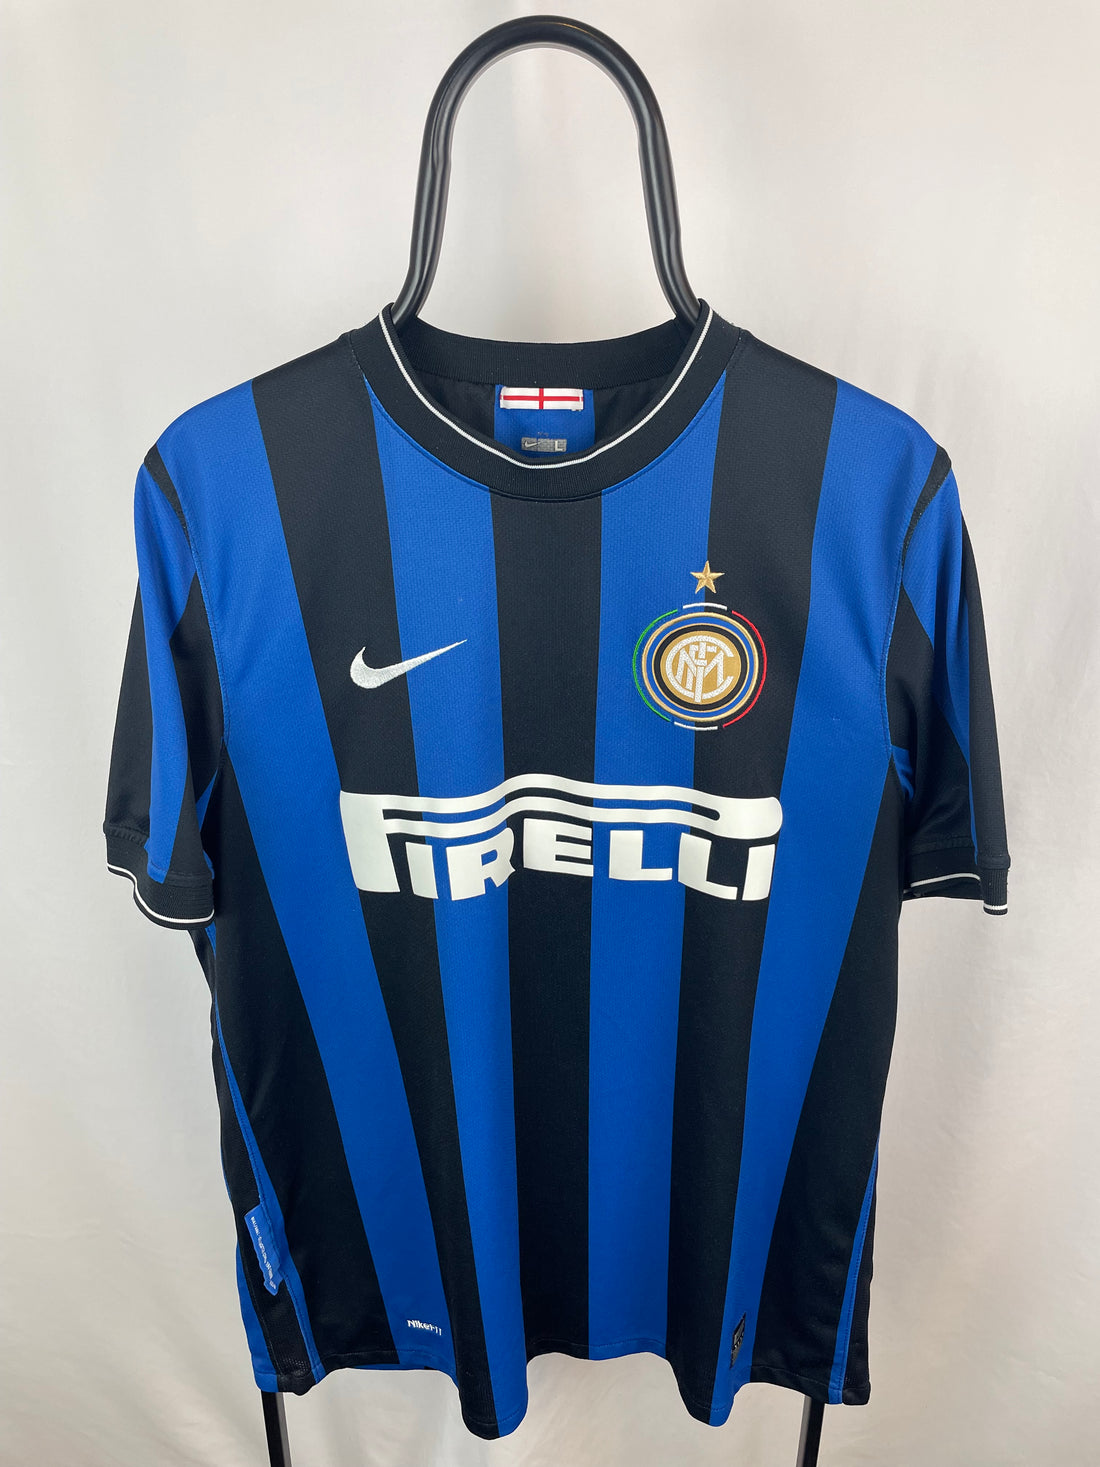 Diego Milito Inter Milan 09/10 hjemmebane trøje - L